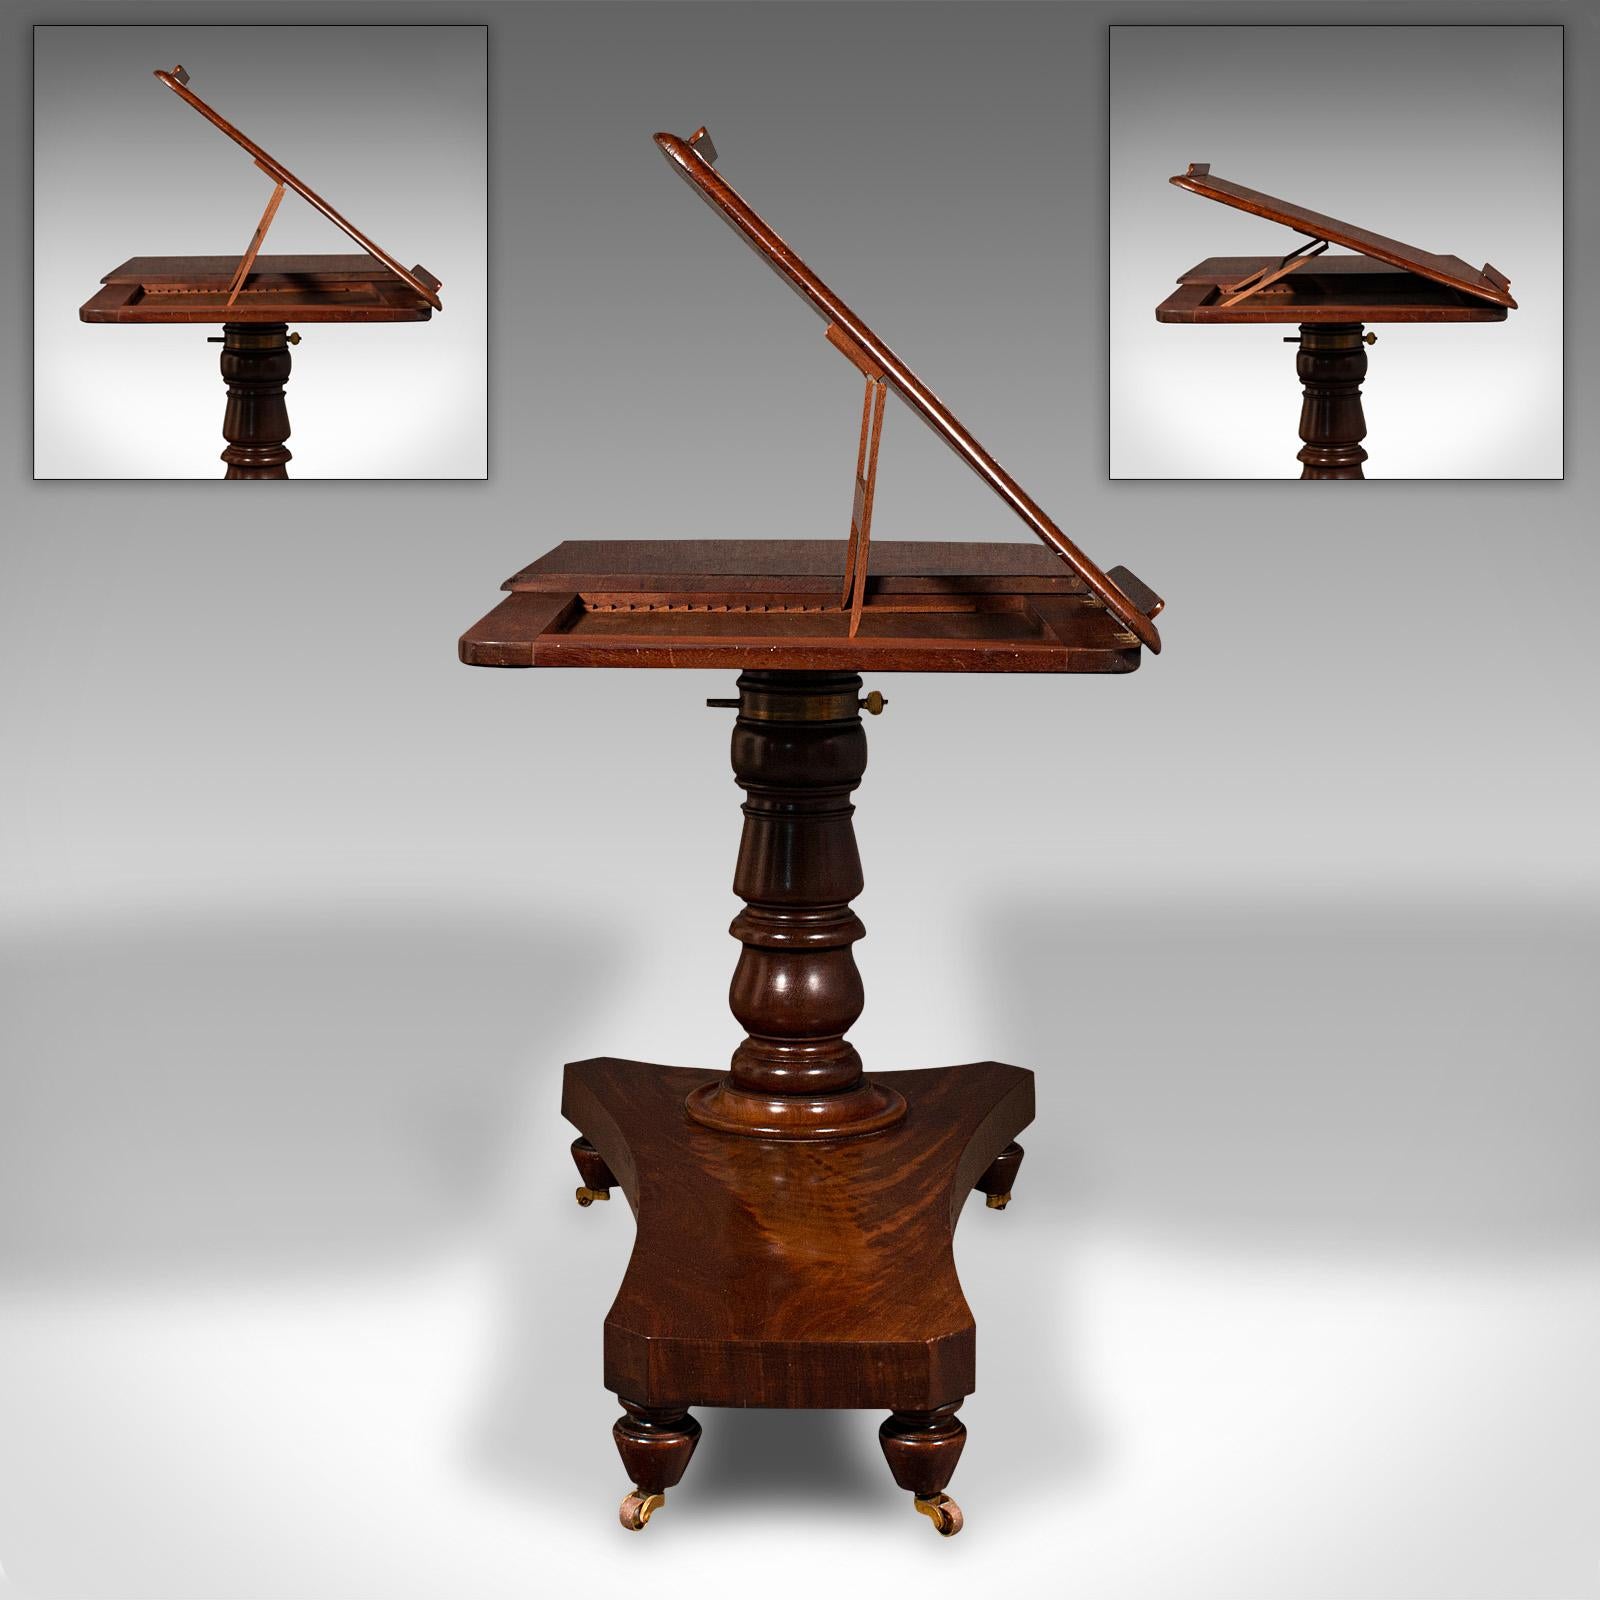 Wood Antique Gentleman's Reading Table, English, Adjustable, Writing Desk, Victorian